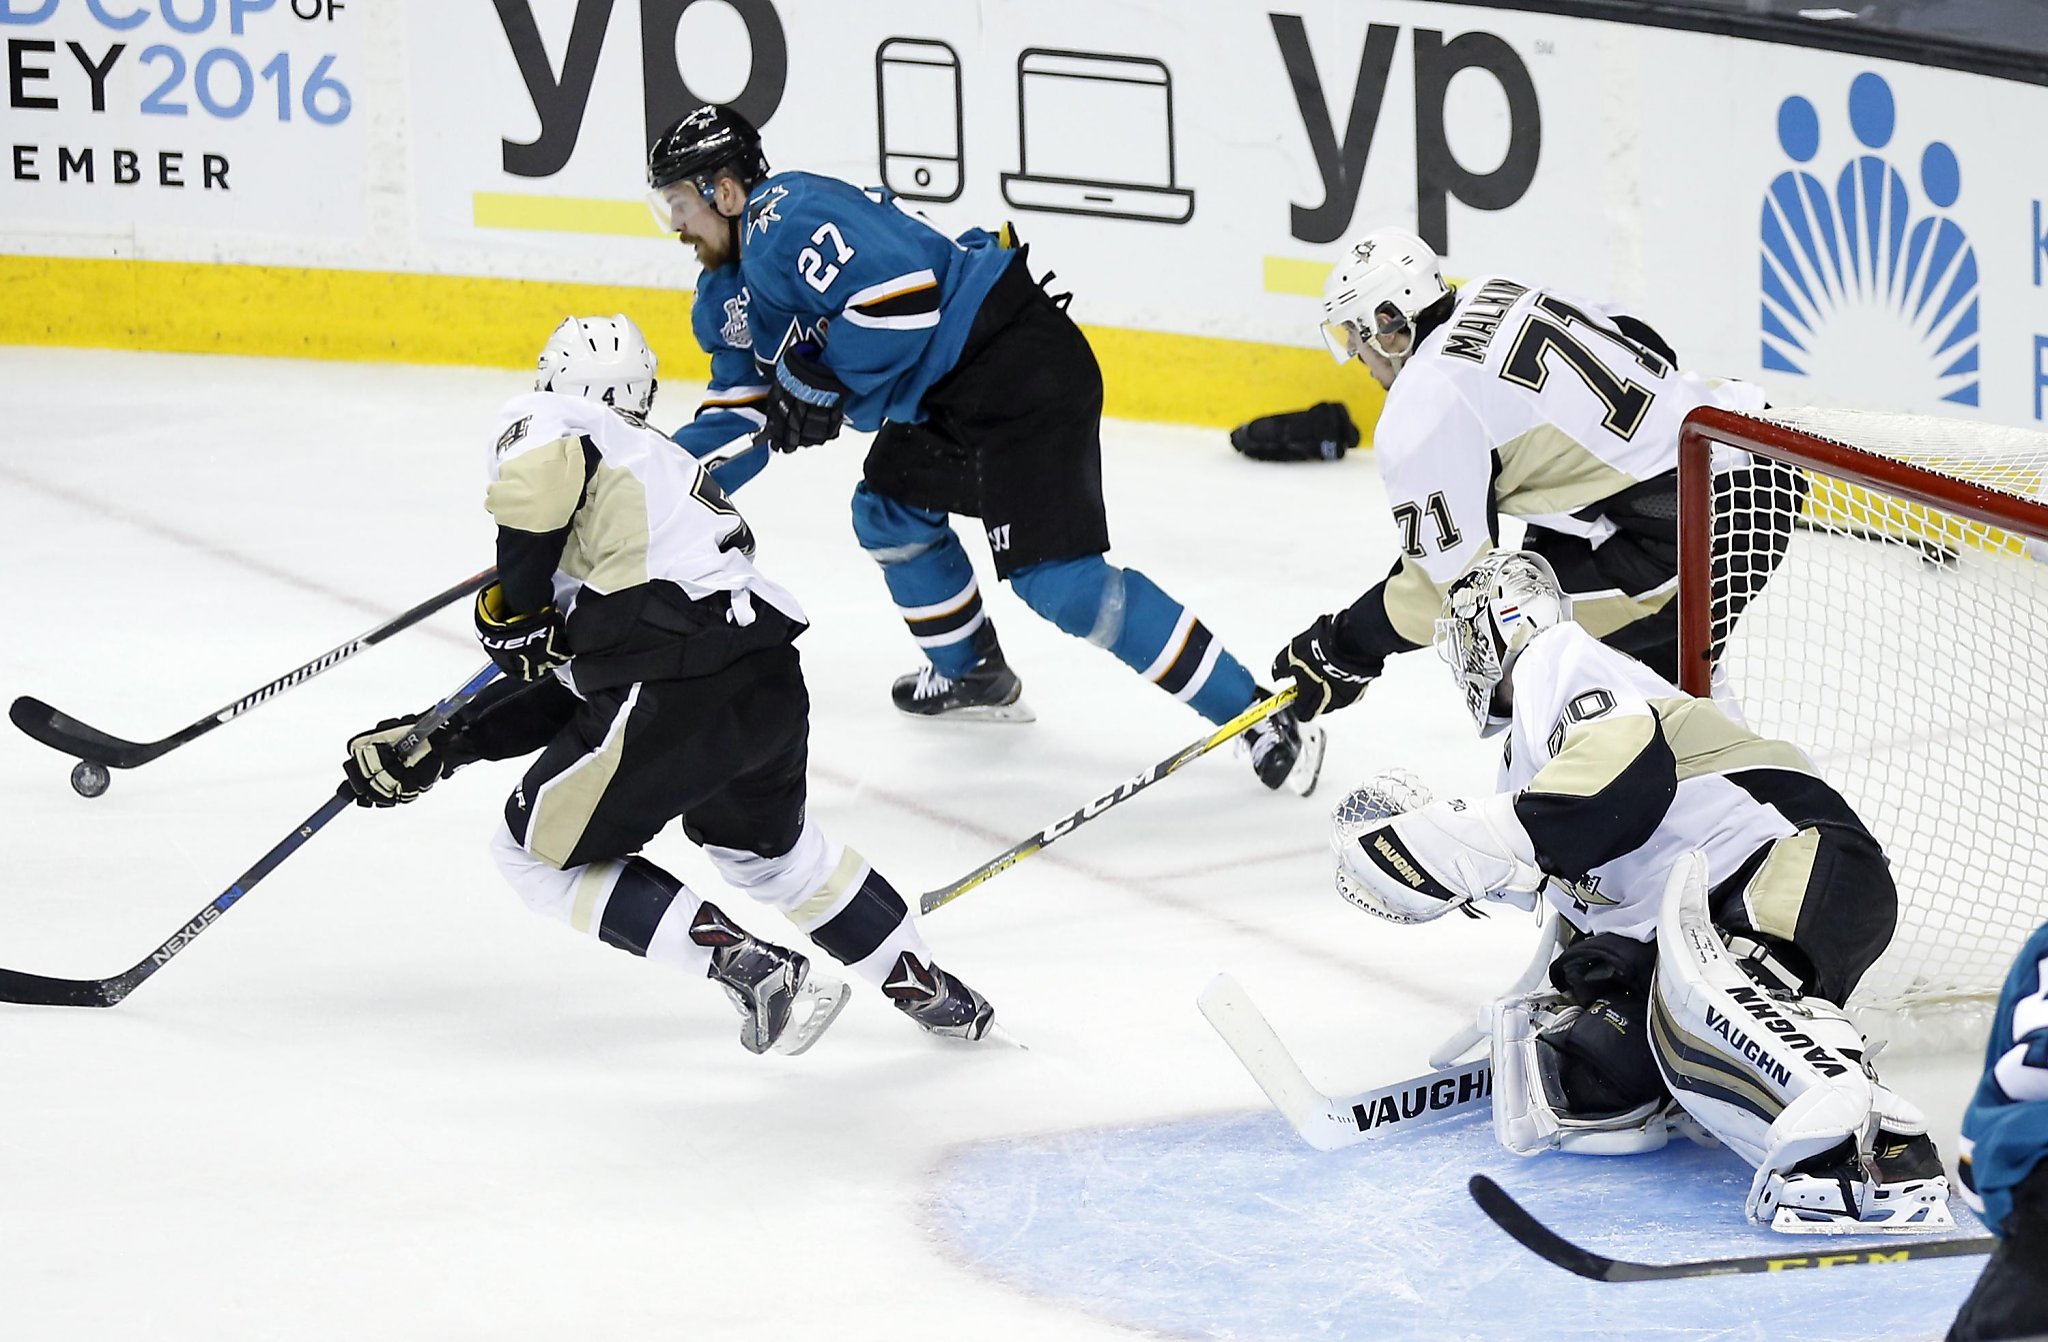 Stanley Cup Final: Joonas Donskoi, Sharks top Penguins - Sports Illustrated